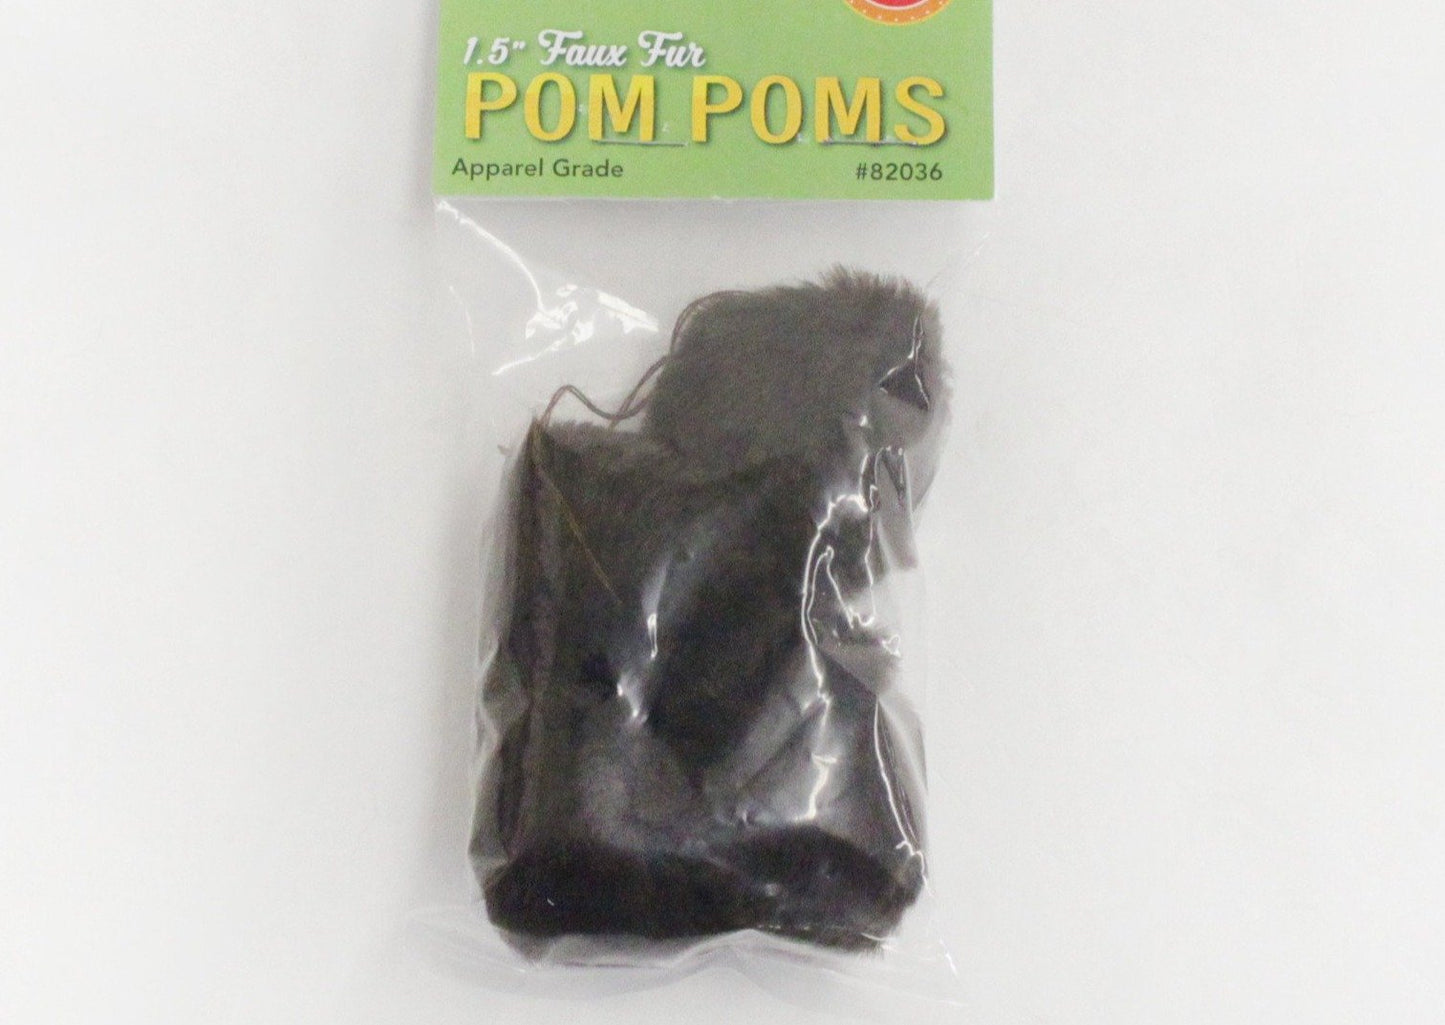 1.5" Faux Fur Pom-Pom Balls